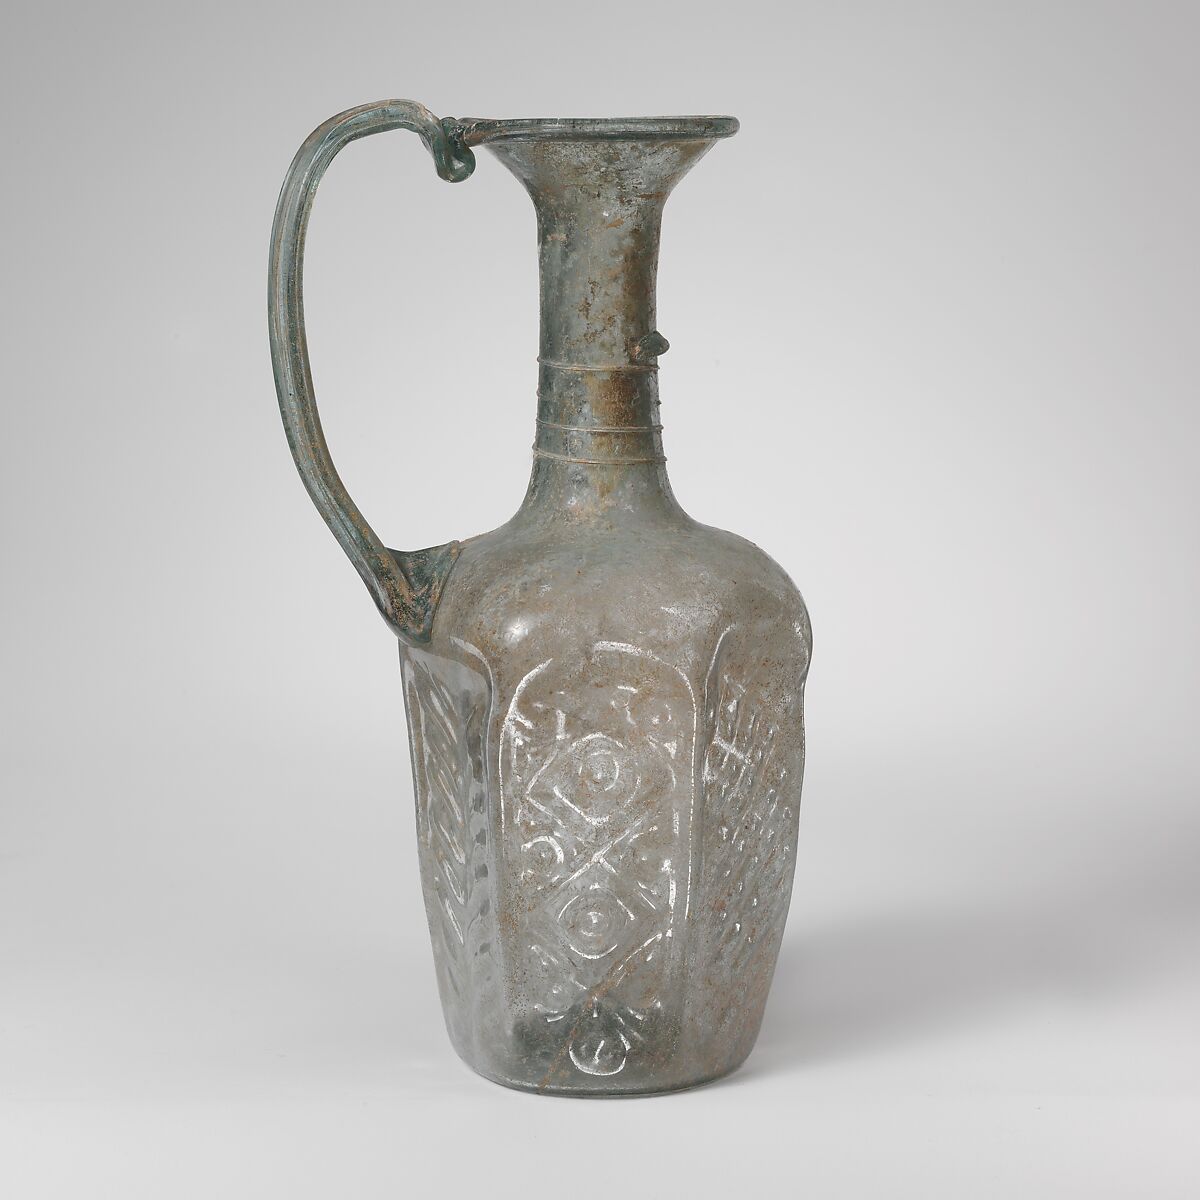 Glass hexagonal jug, Glass, Roman, Syrian 